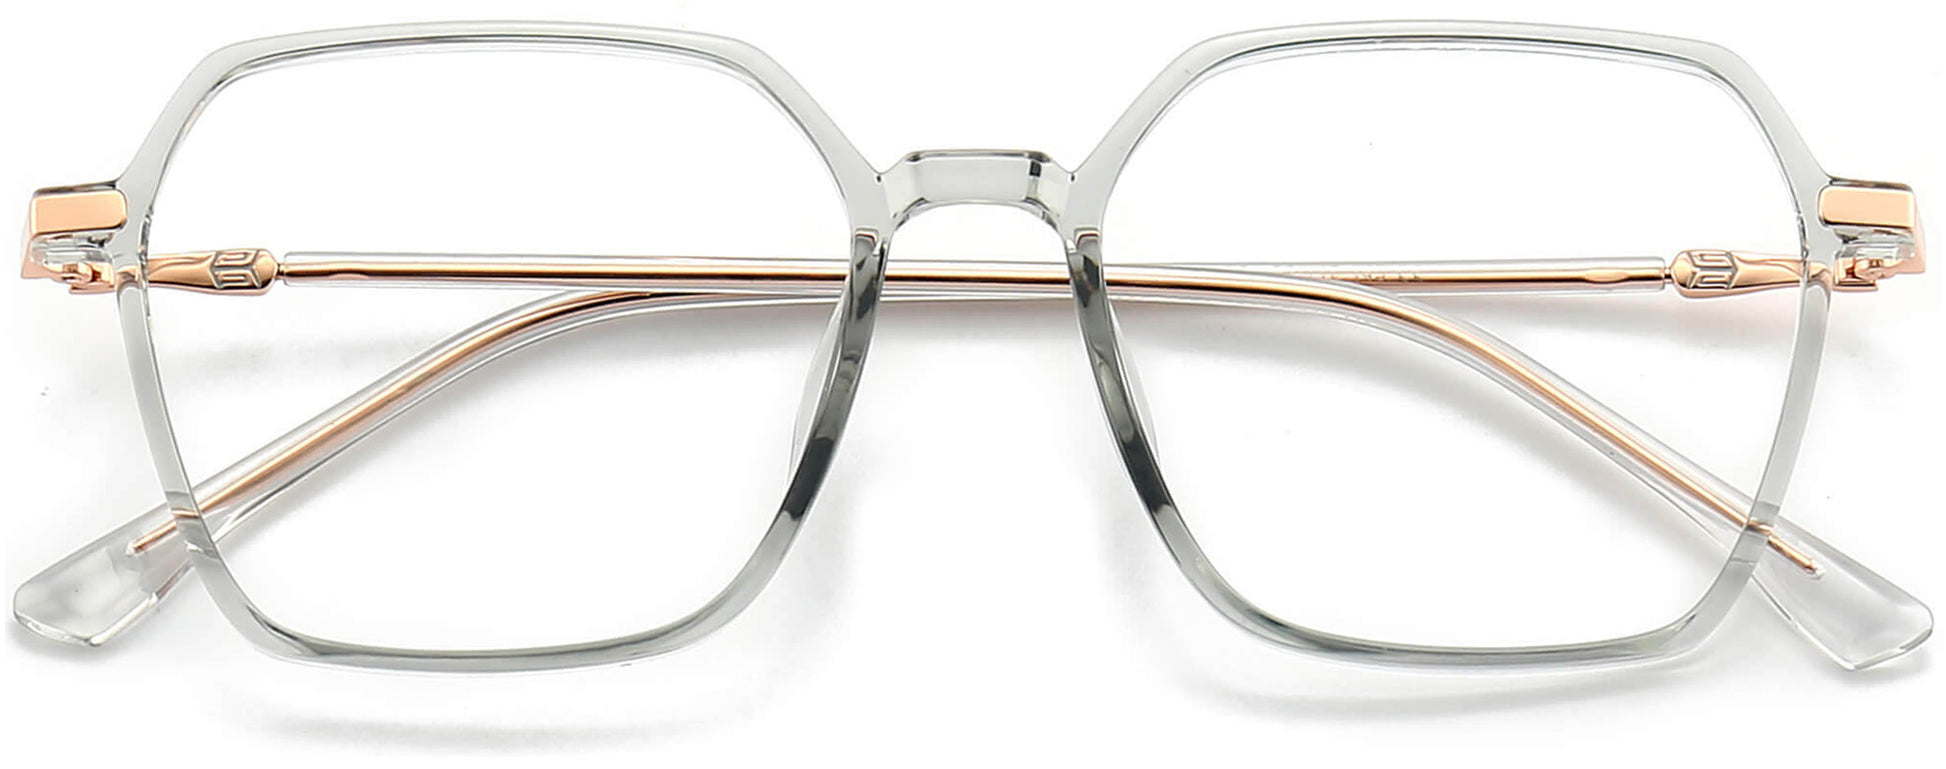 Sylvia Geometric Gray Eyeglasses from ANRRI, closed view